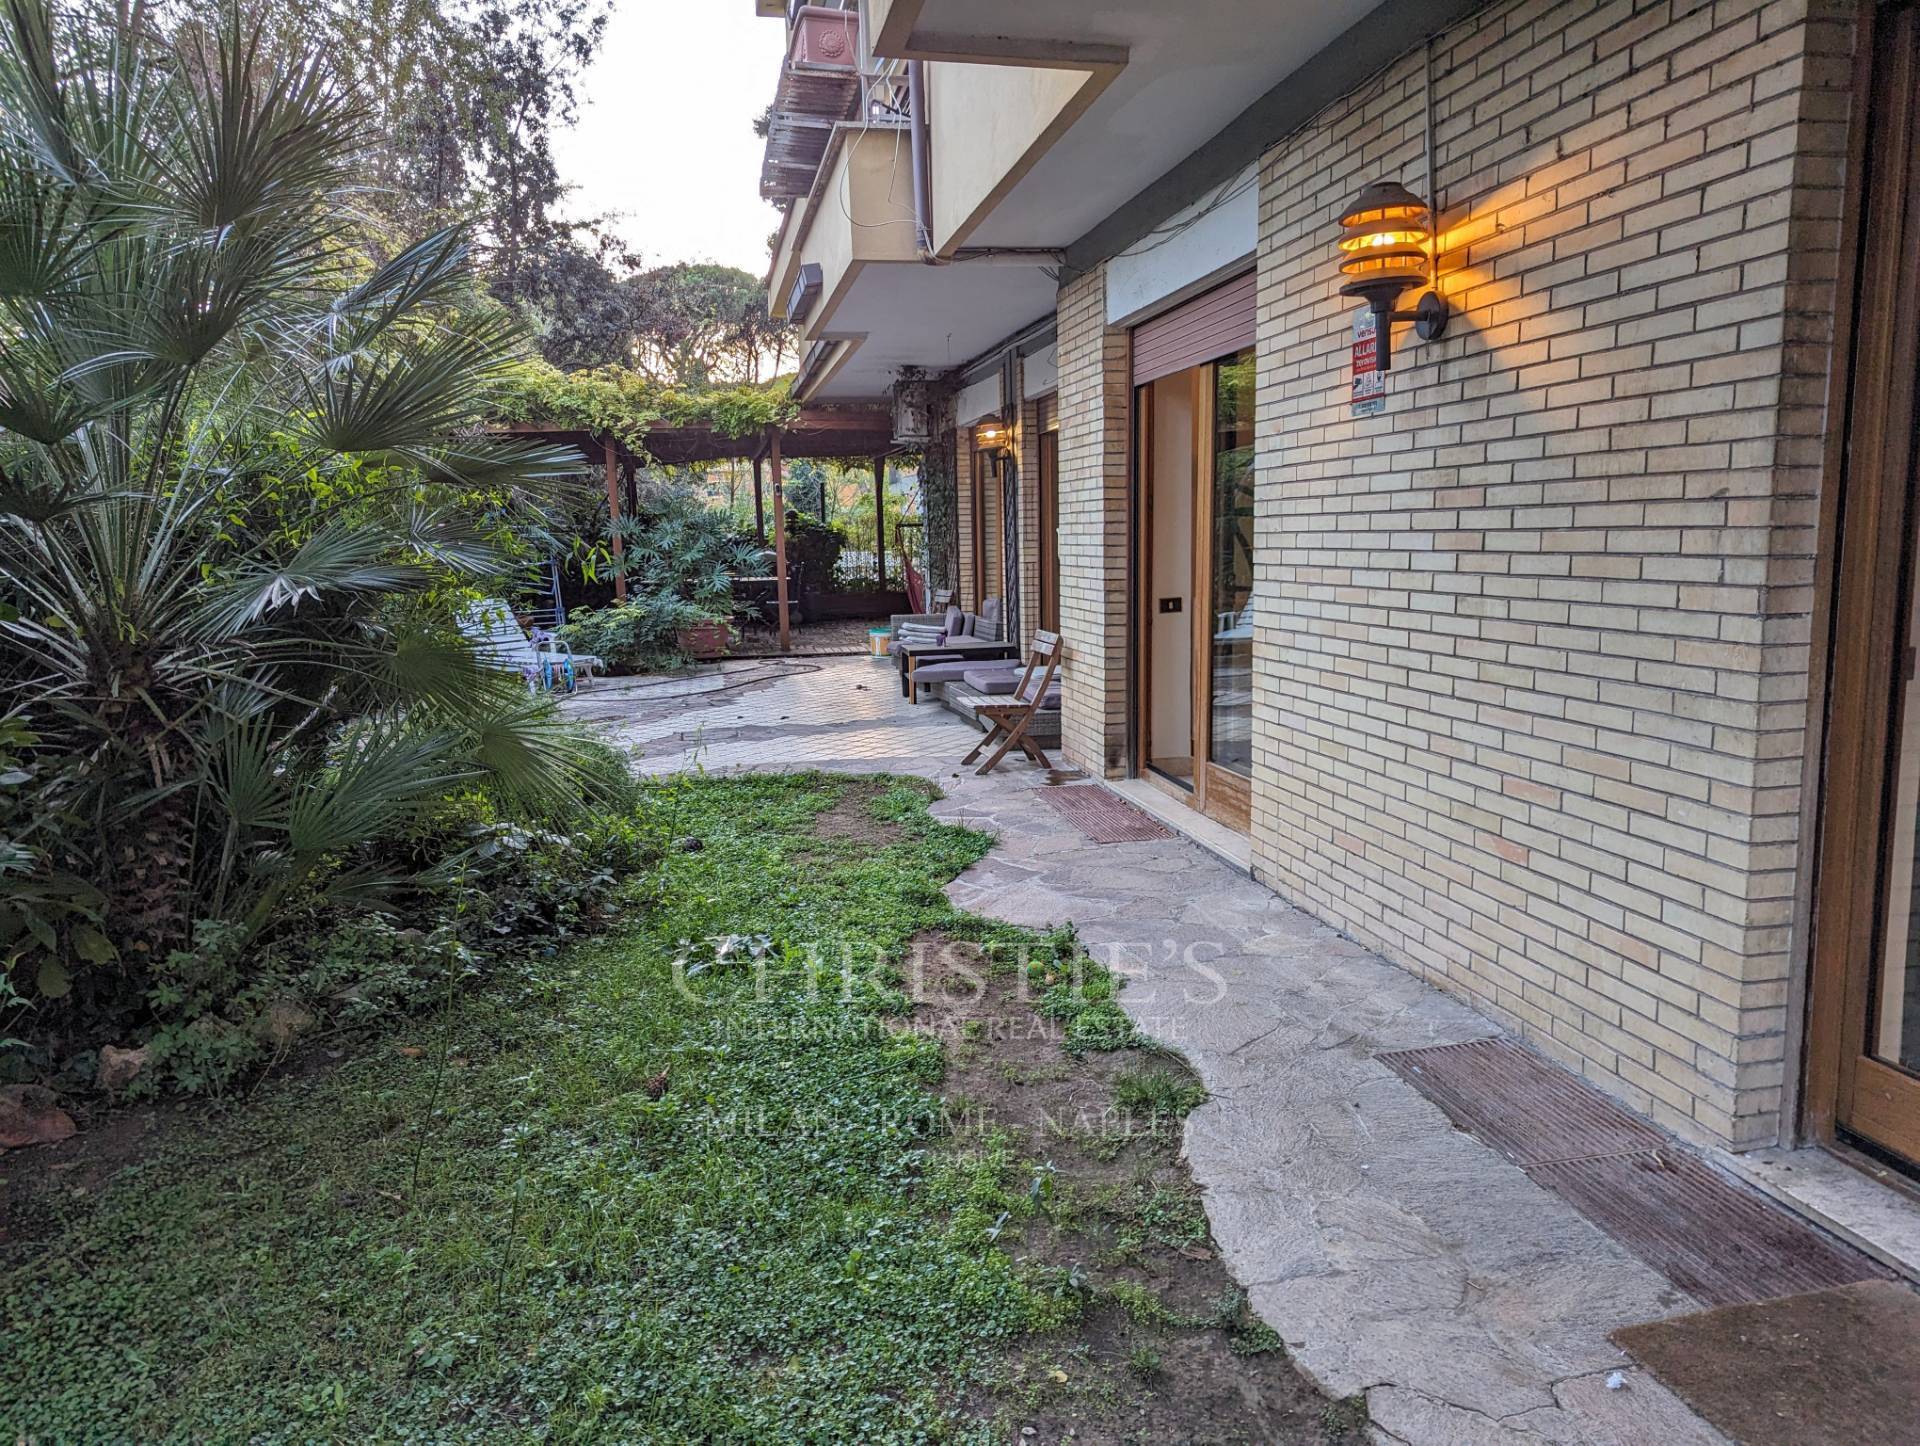 picture of Prestigious Apartment For Rent In Vigna Stelluti - Rome